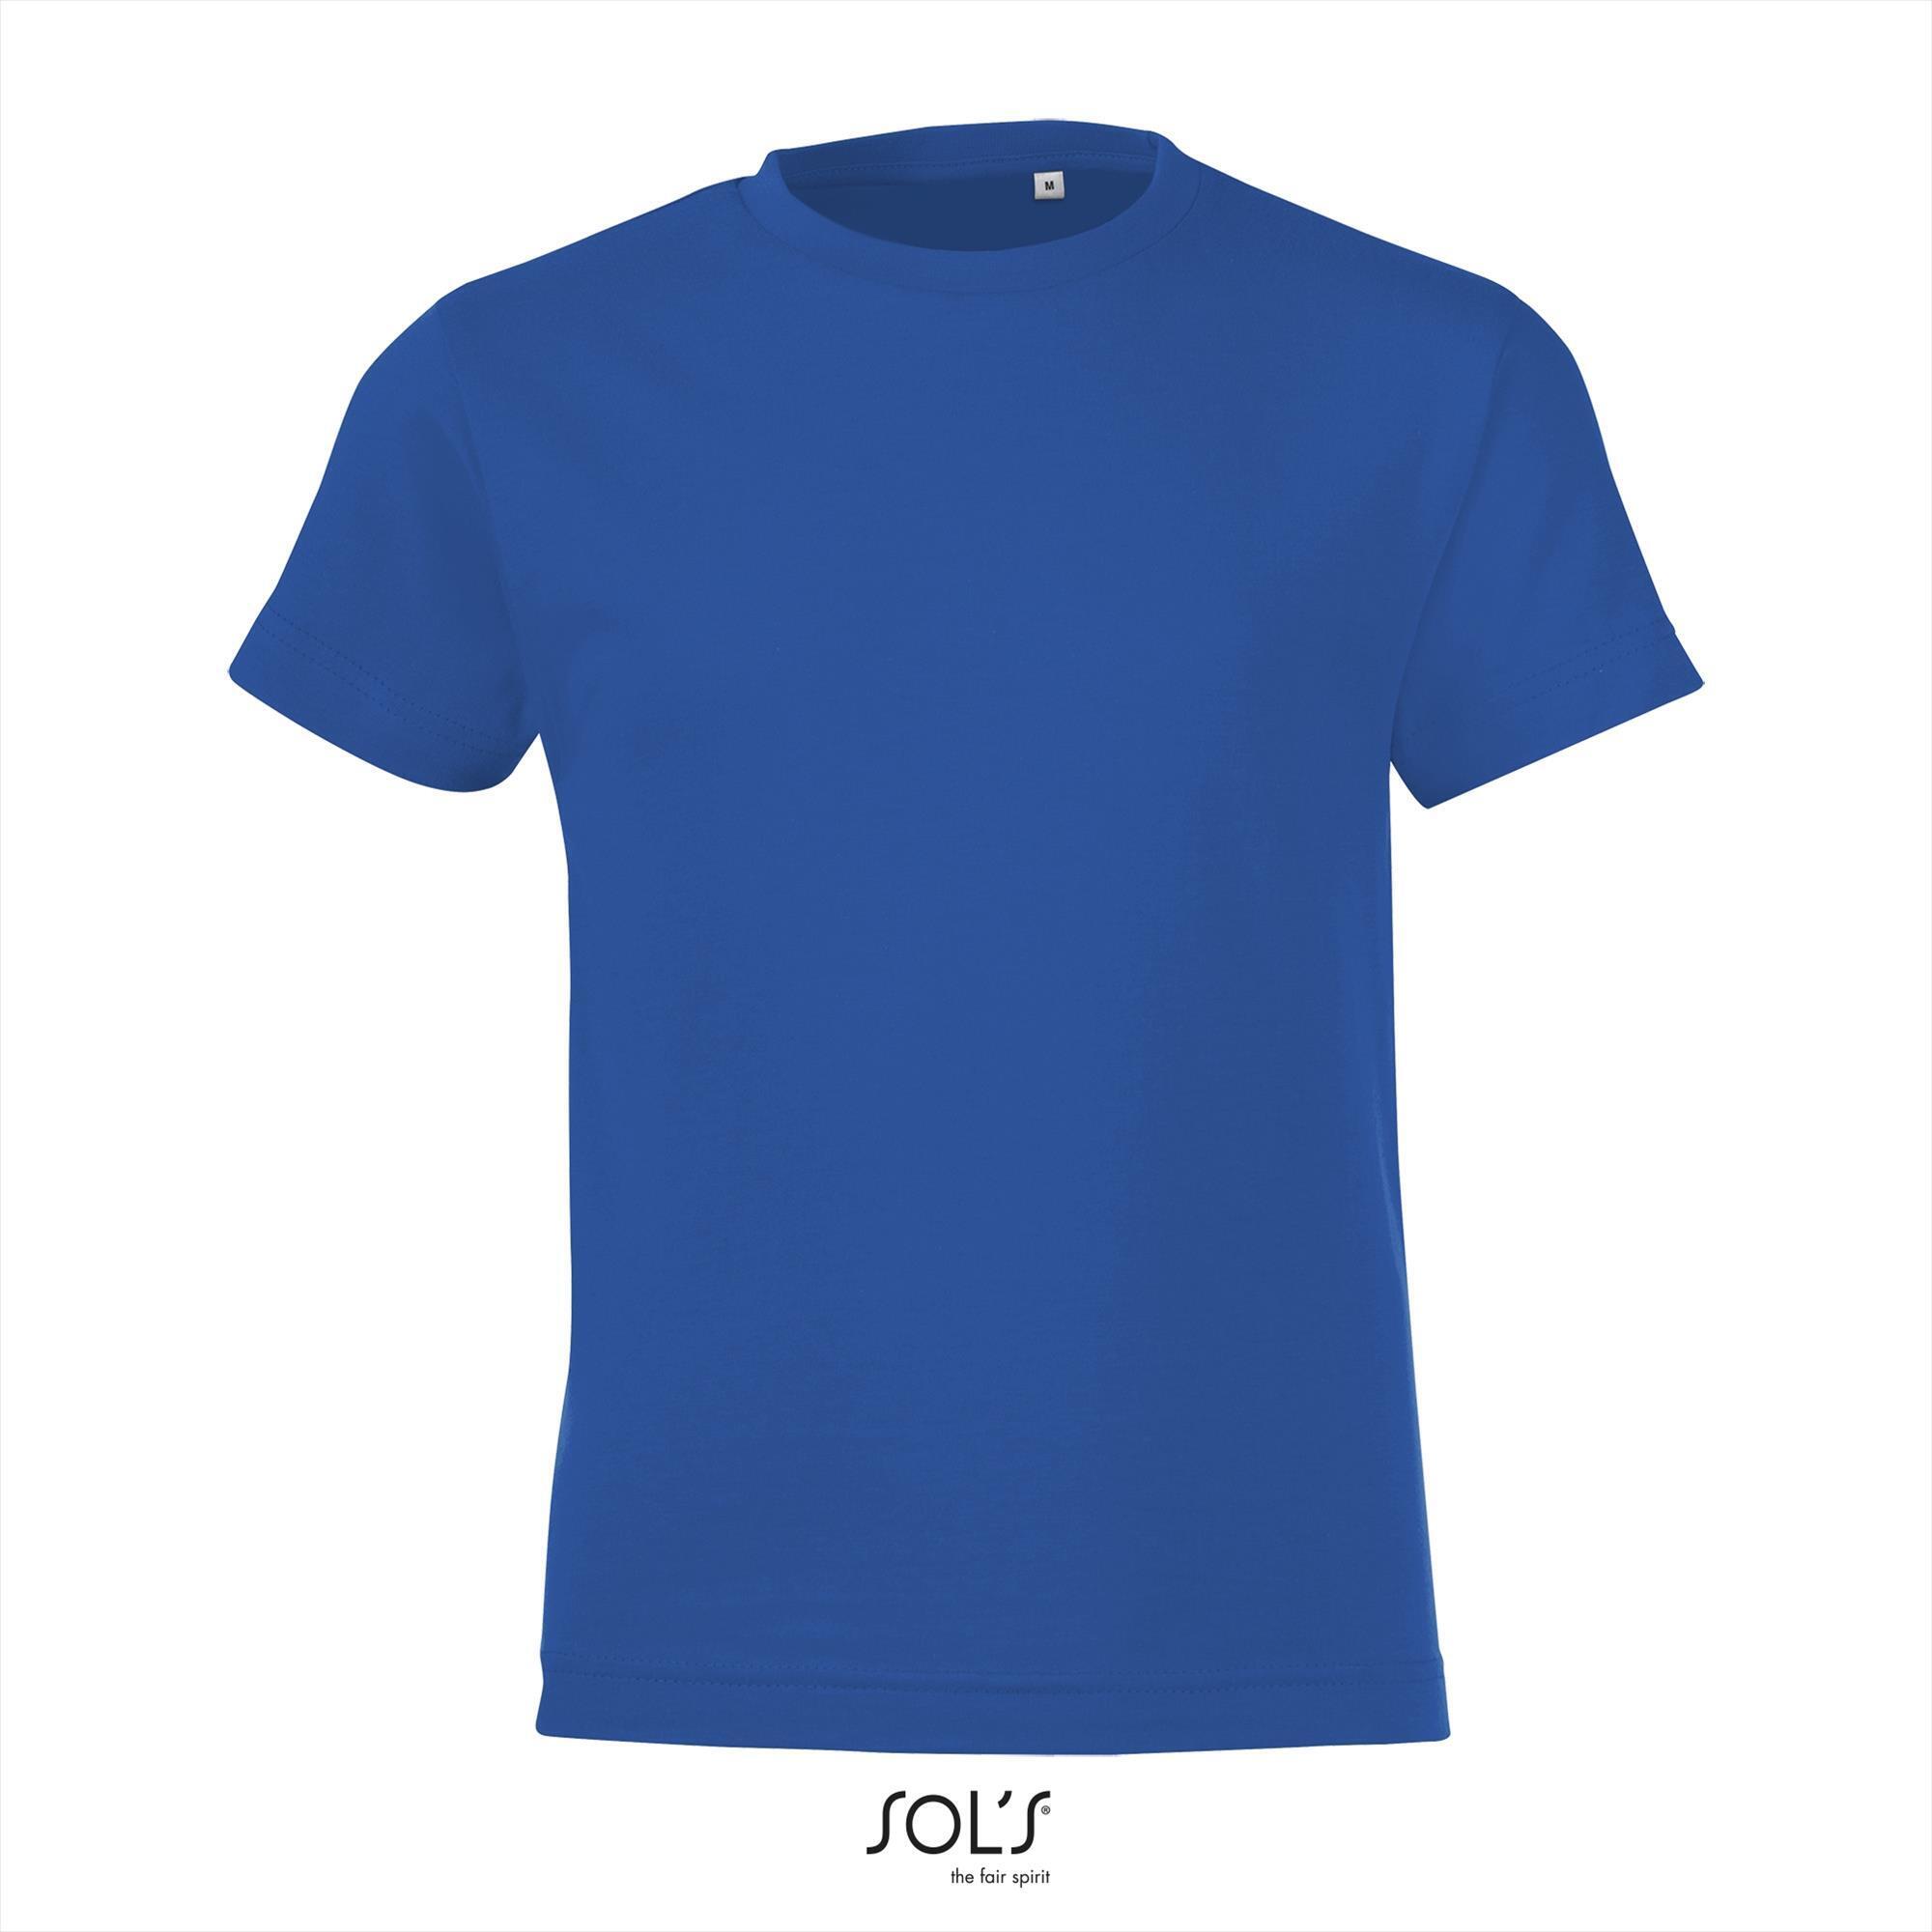 Kinder shirt royal blauw Sol's 150 Regent fit